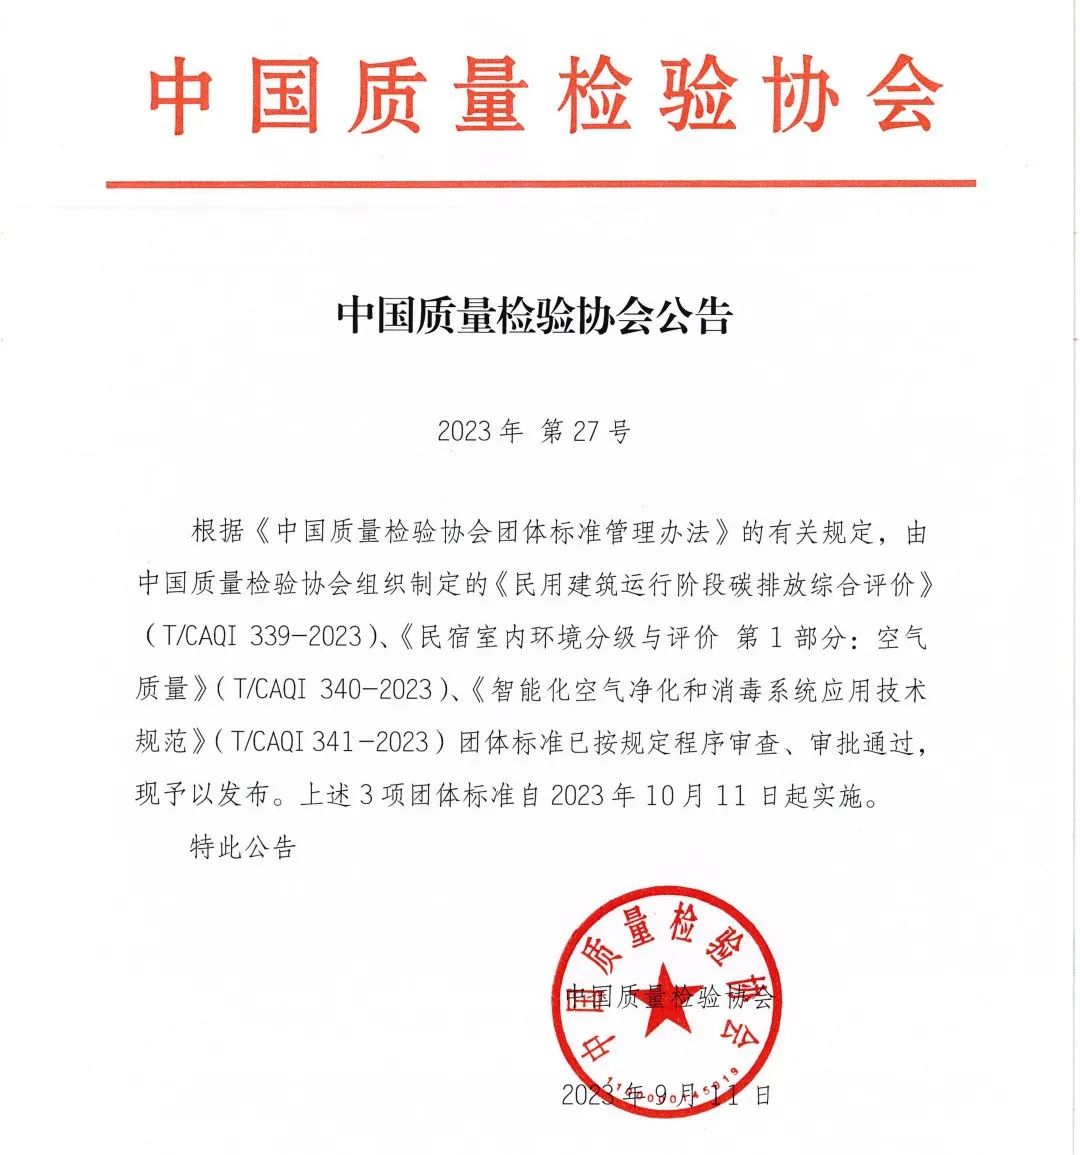 T/CAQI 341-2023《智能化空气净化和消毒系统应用技术规范》正式发布-第九届上海国际空气新风展览会 AIRVENTEC CHINA 2024|新风展|净化展|室内空气展